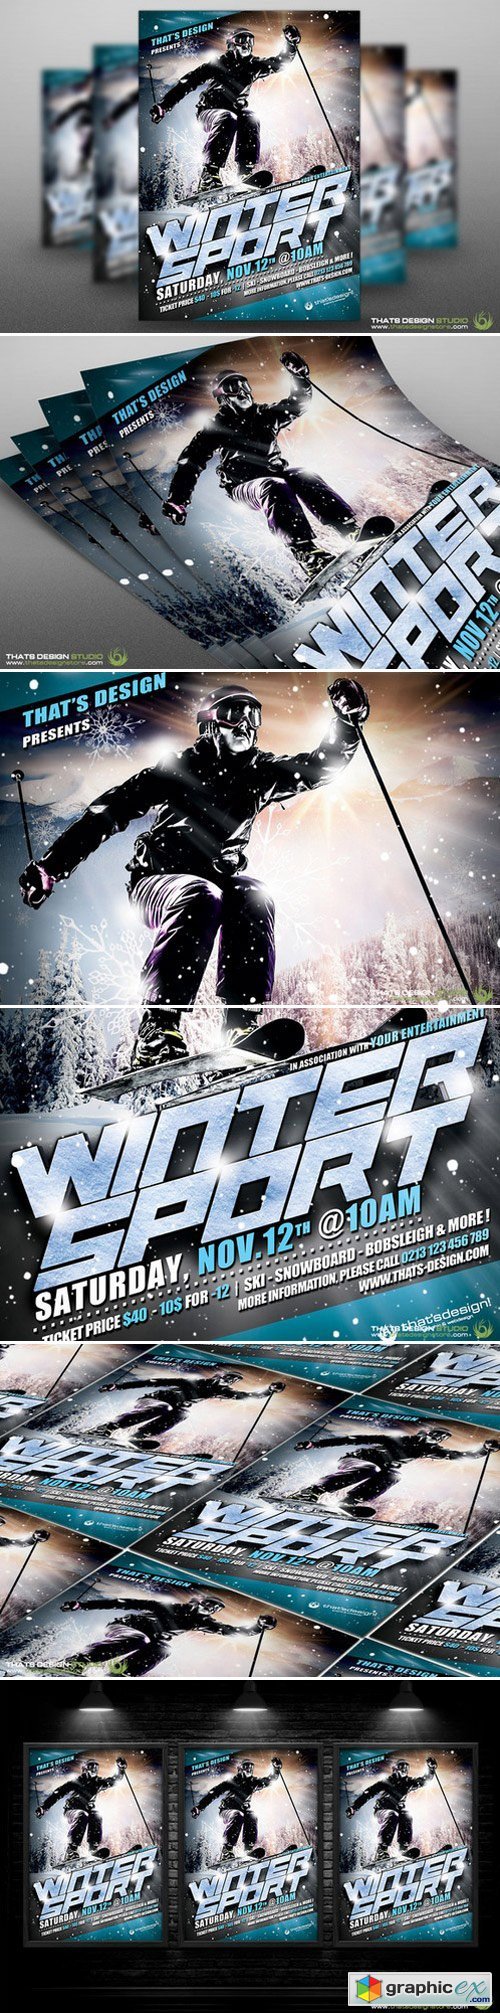 Winter Sports Flyer Template V1